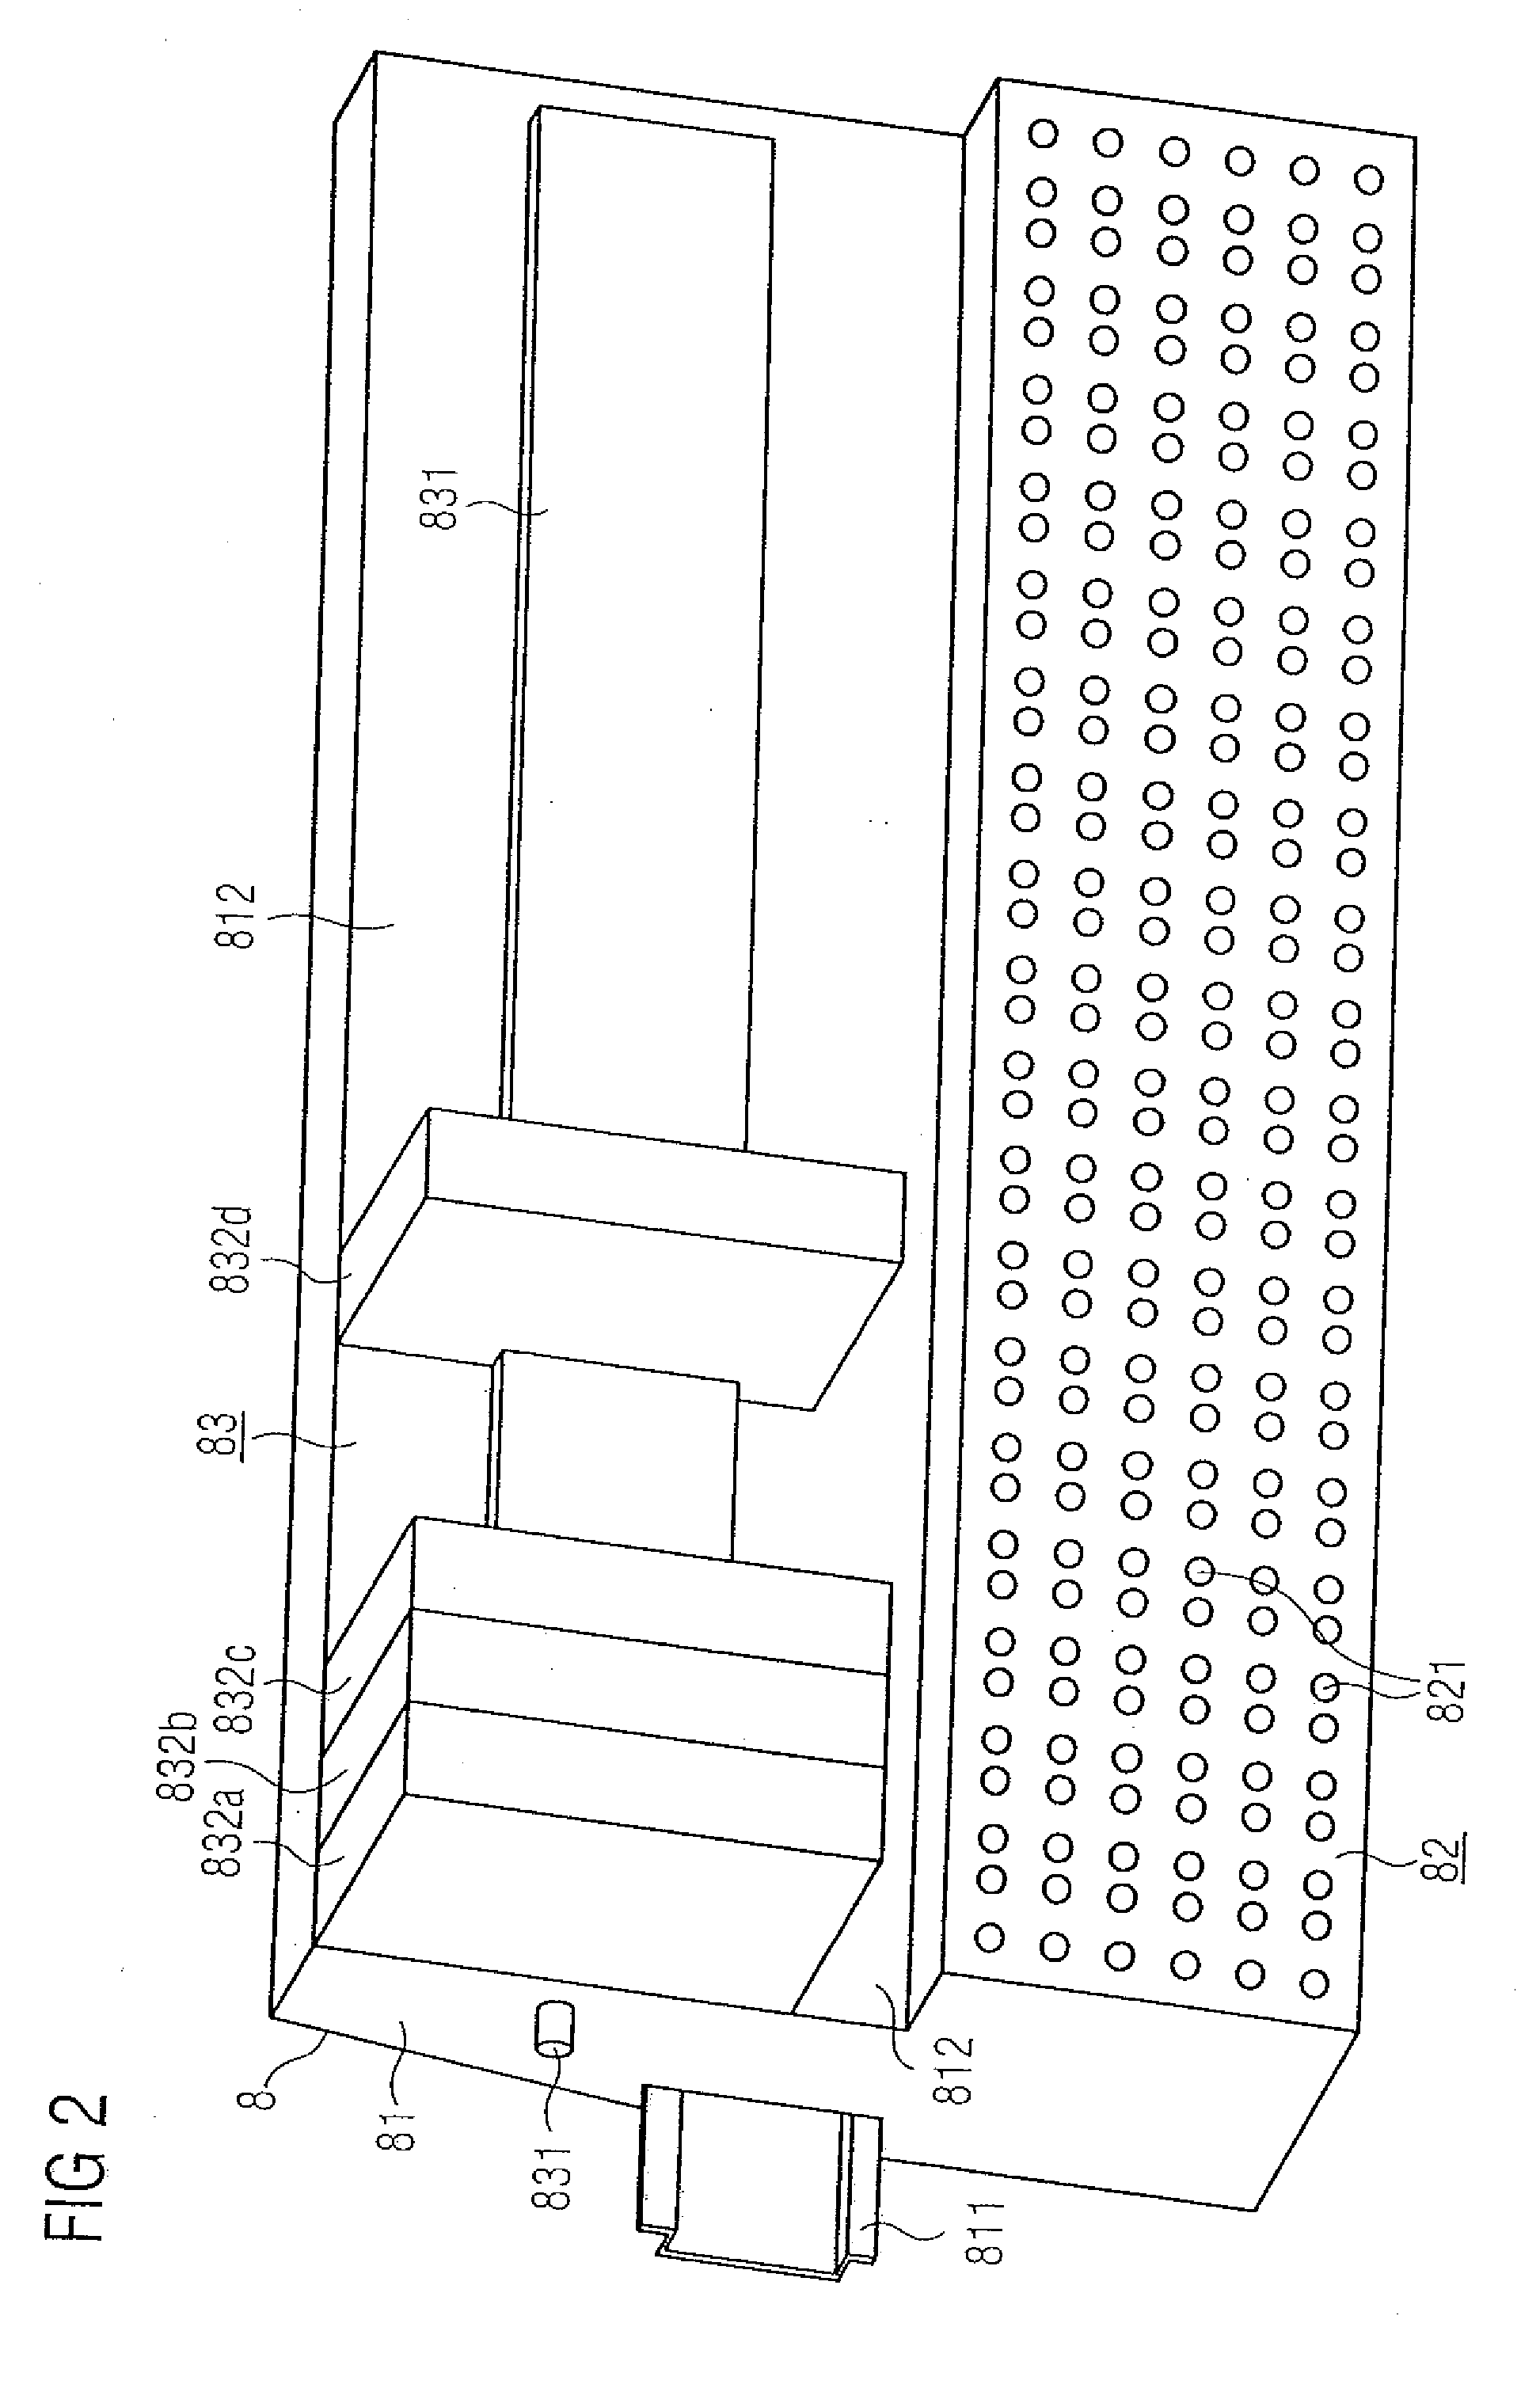 Automation System Having A Programmable Matrix Module